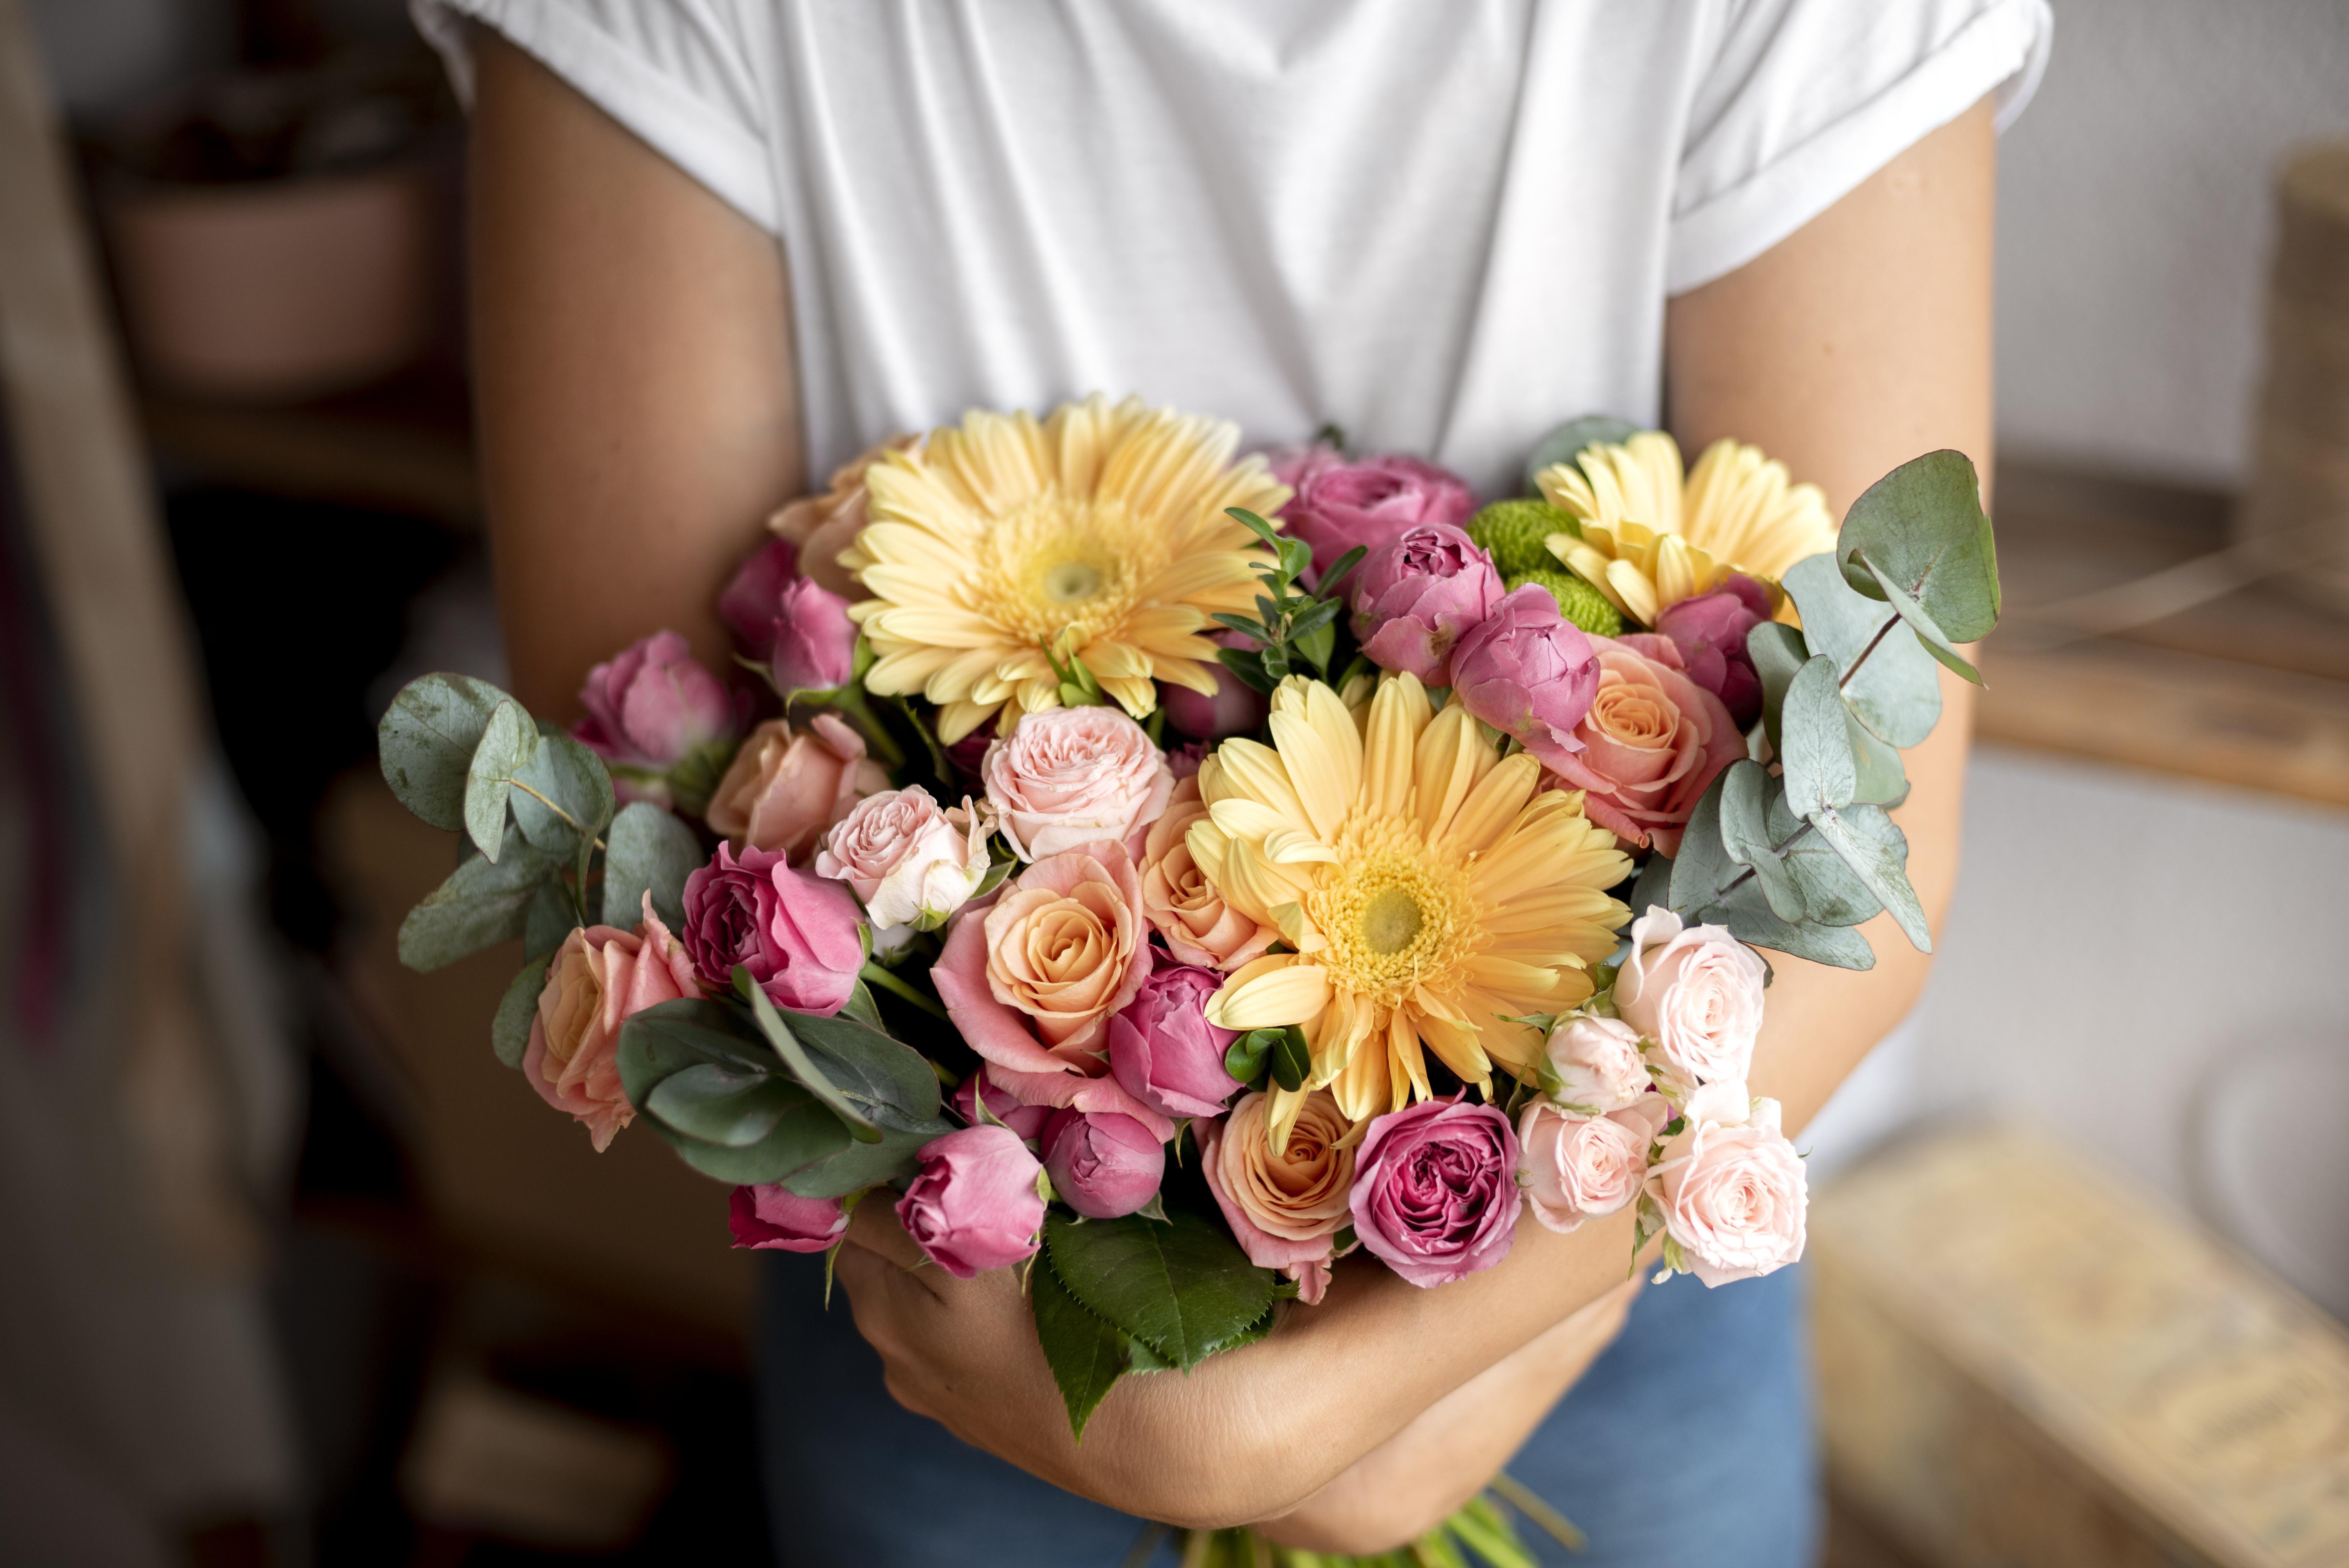 close-up-hands-holding-flowers-bouquet.jpg